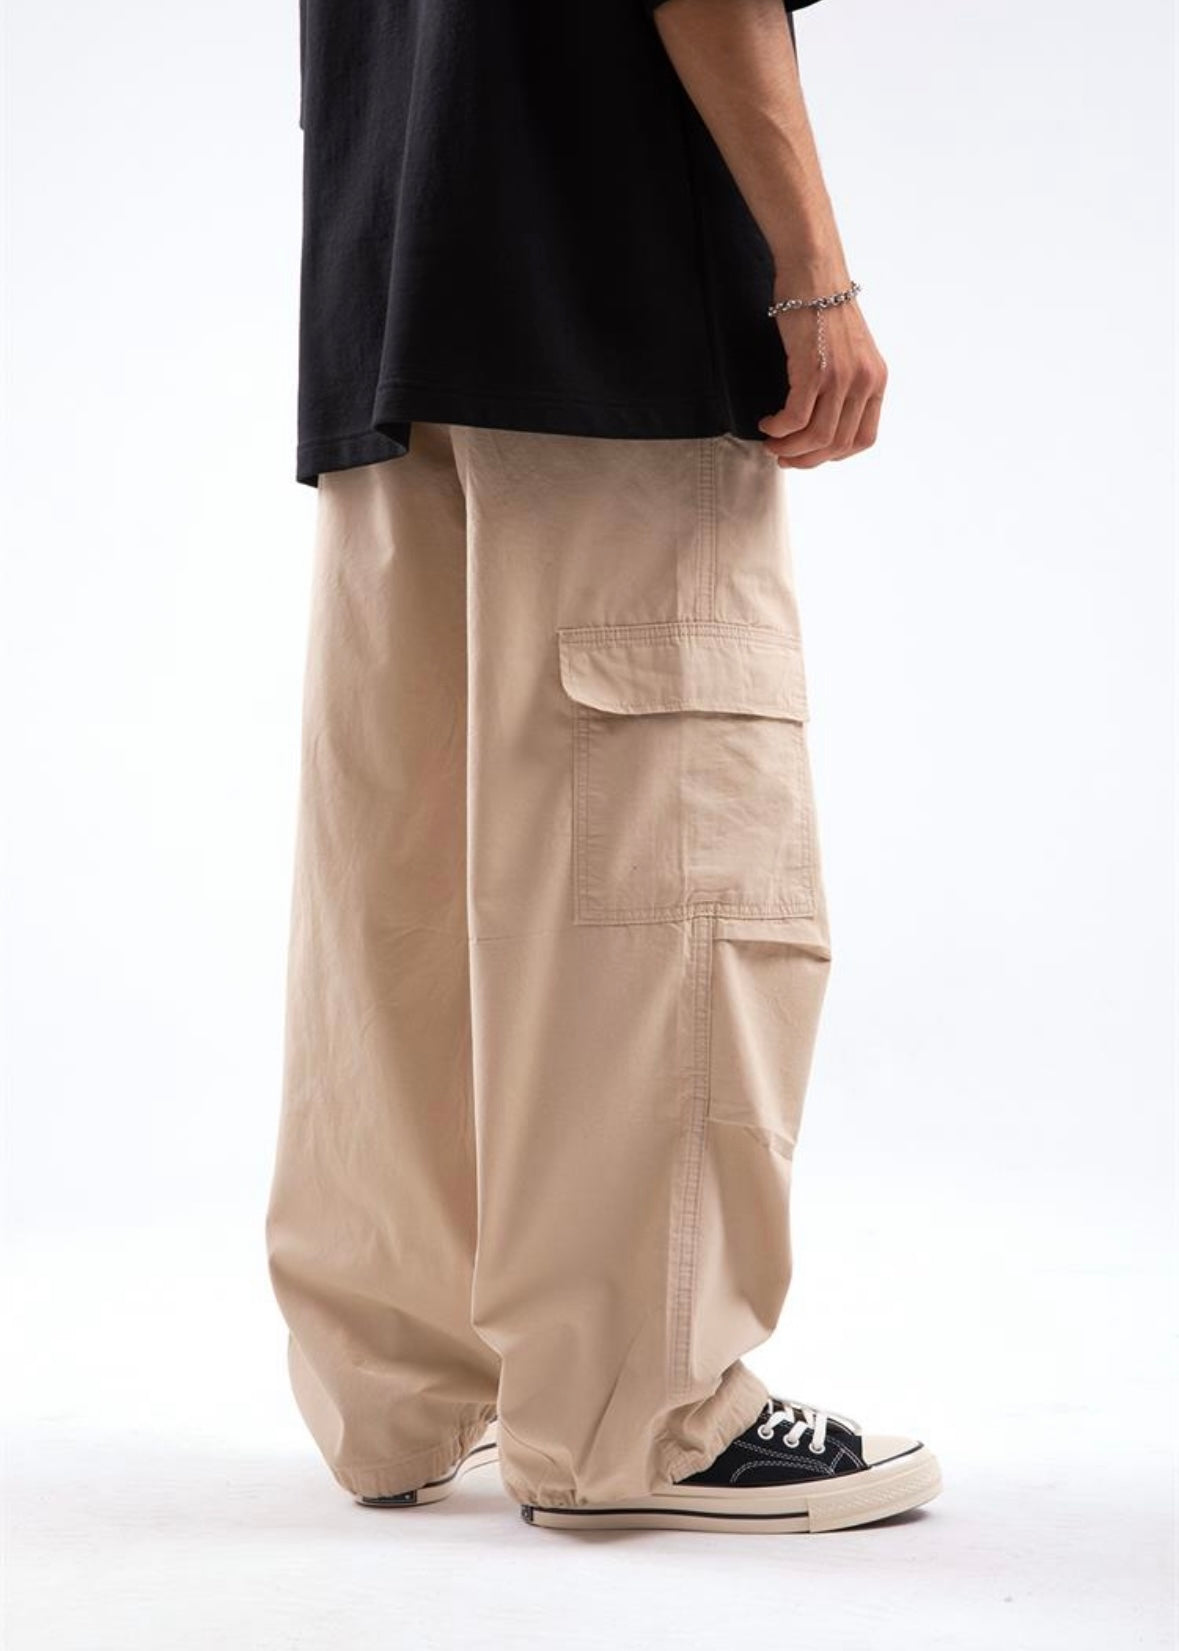 Adjustable Beige Pocket Pants - Clothing Lab